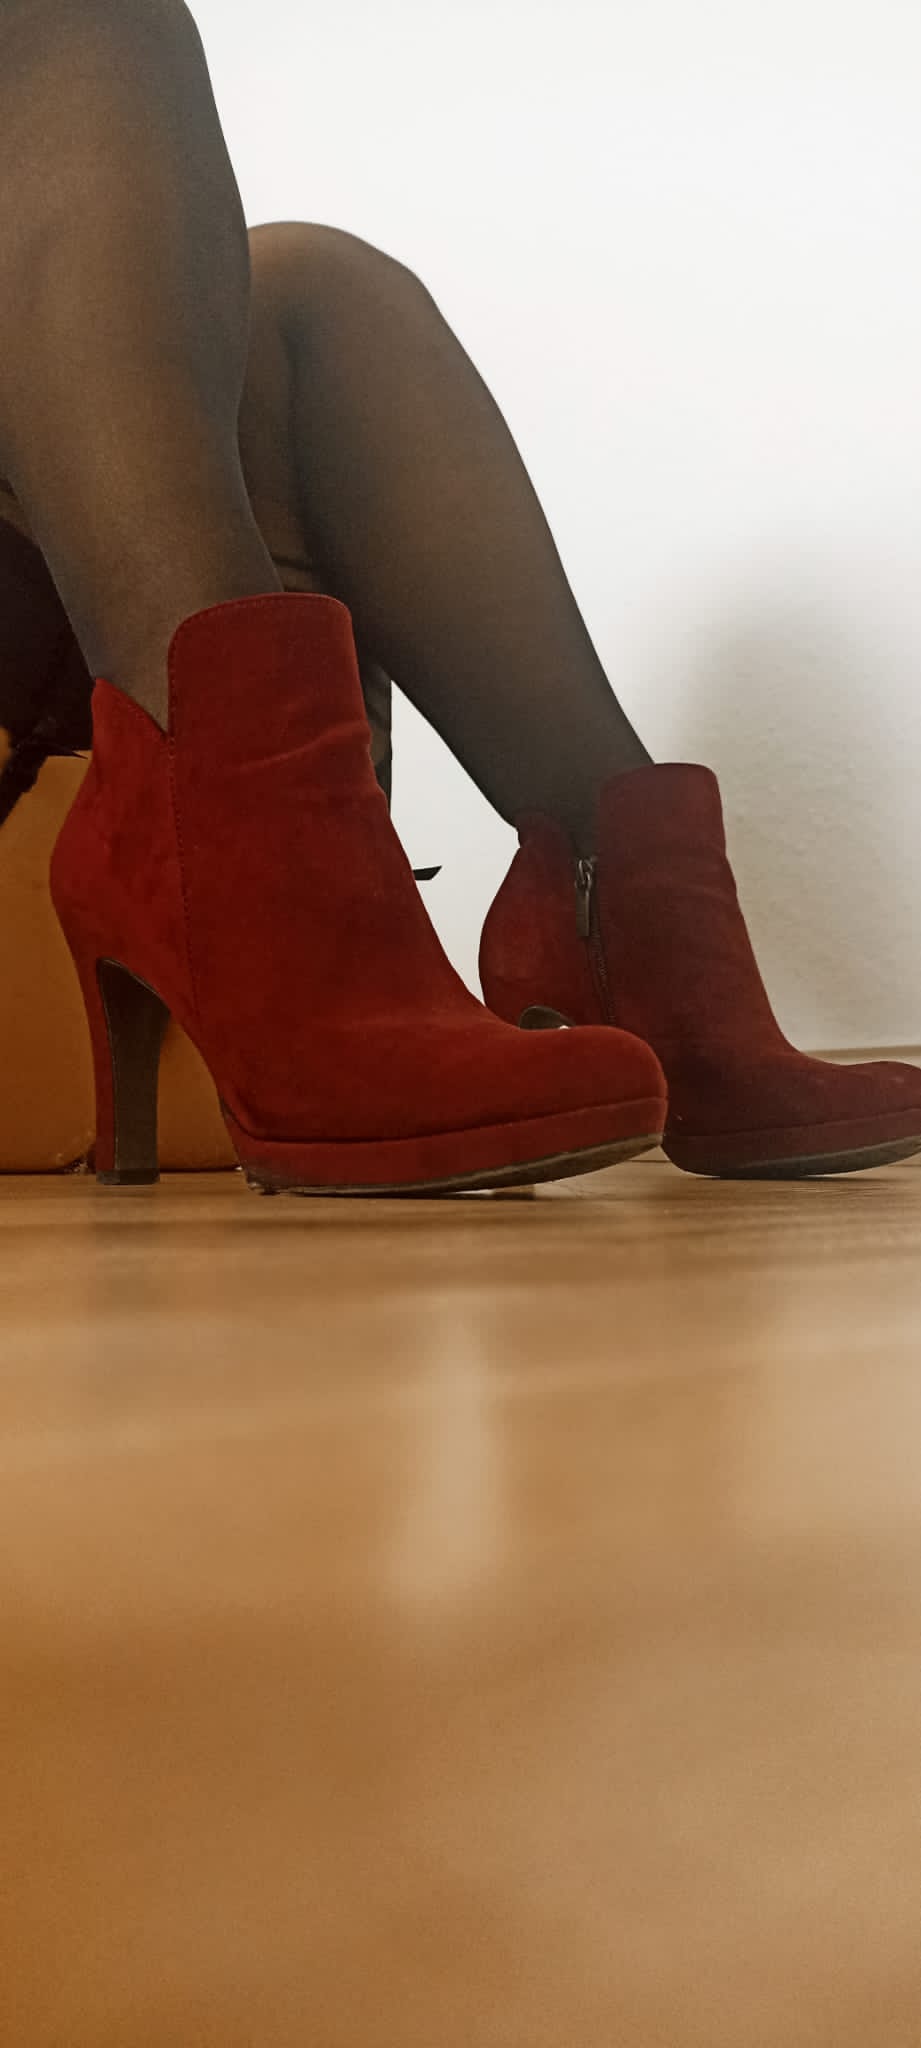 Foto-Set Strapse & rote Heels